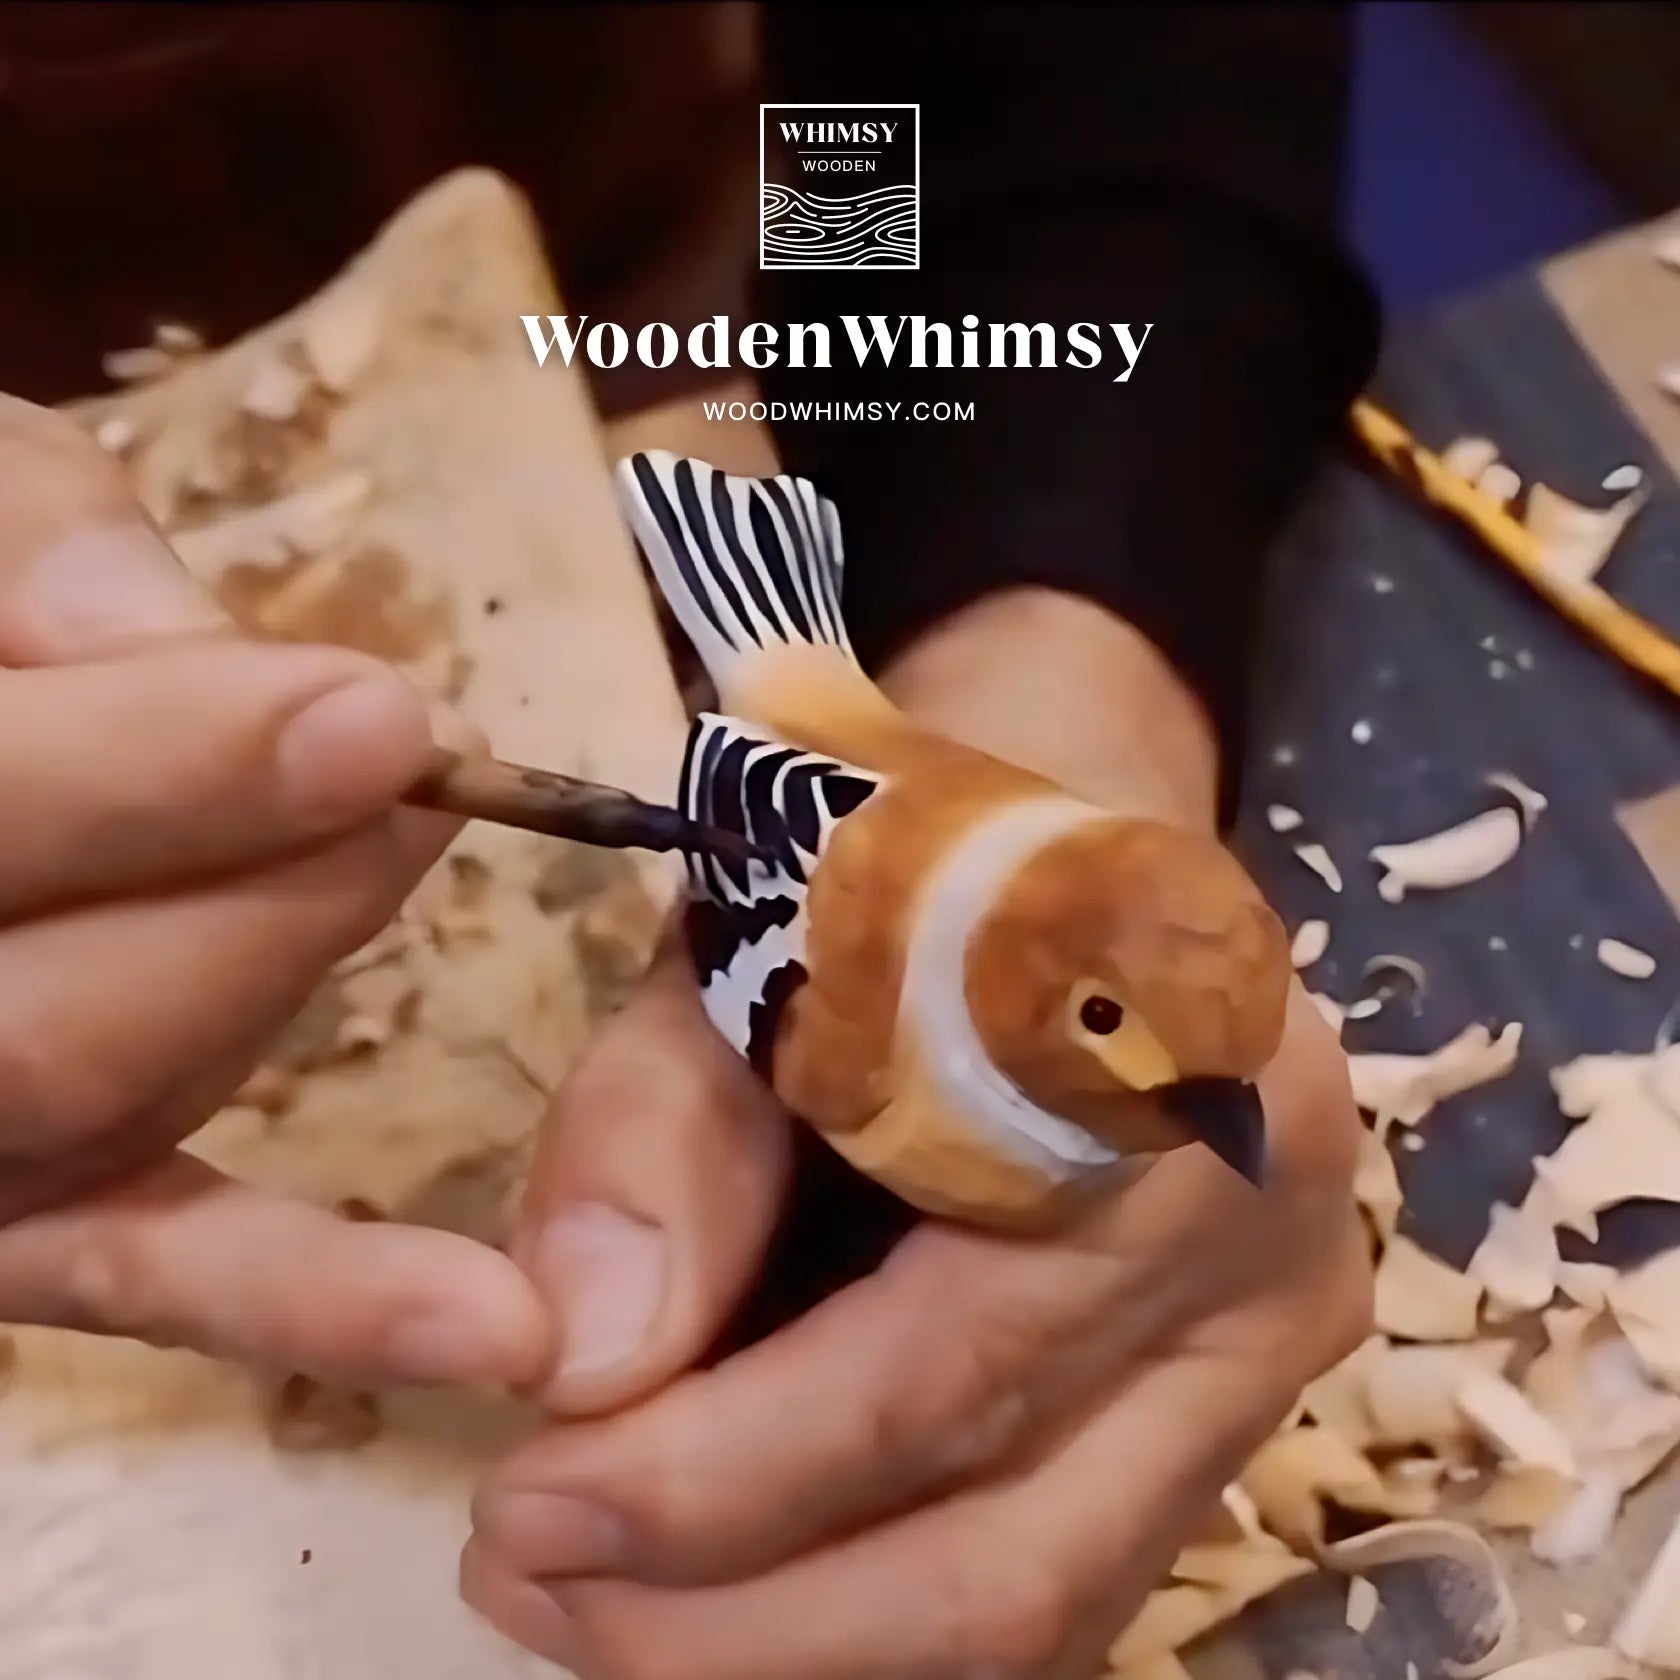 Craftsmen coloring wood carvings of birds